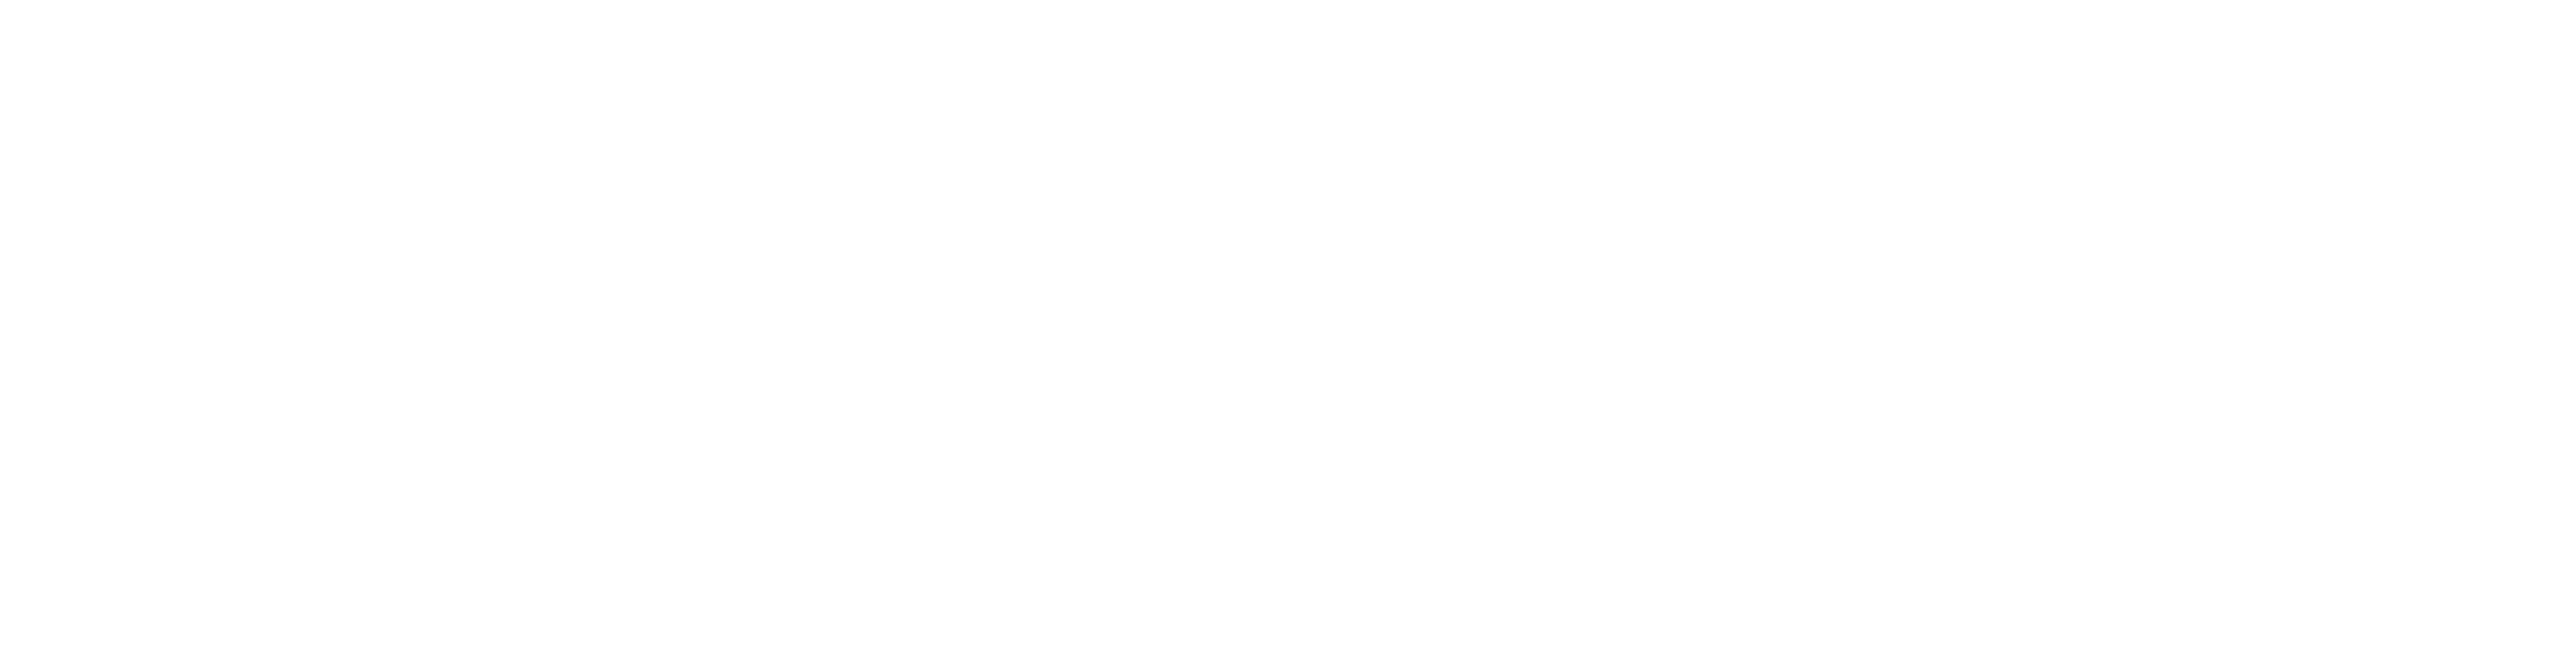 LowLight_logo_WHITE.png